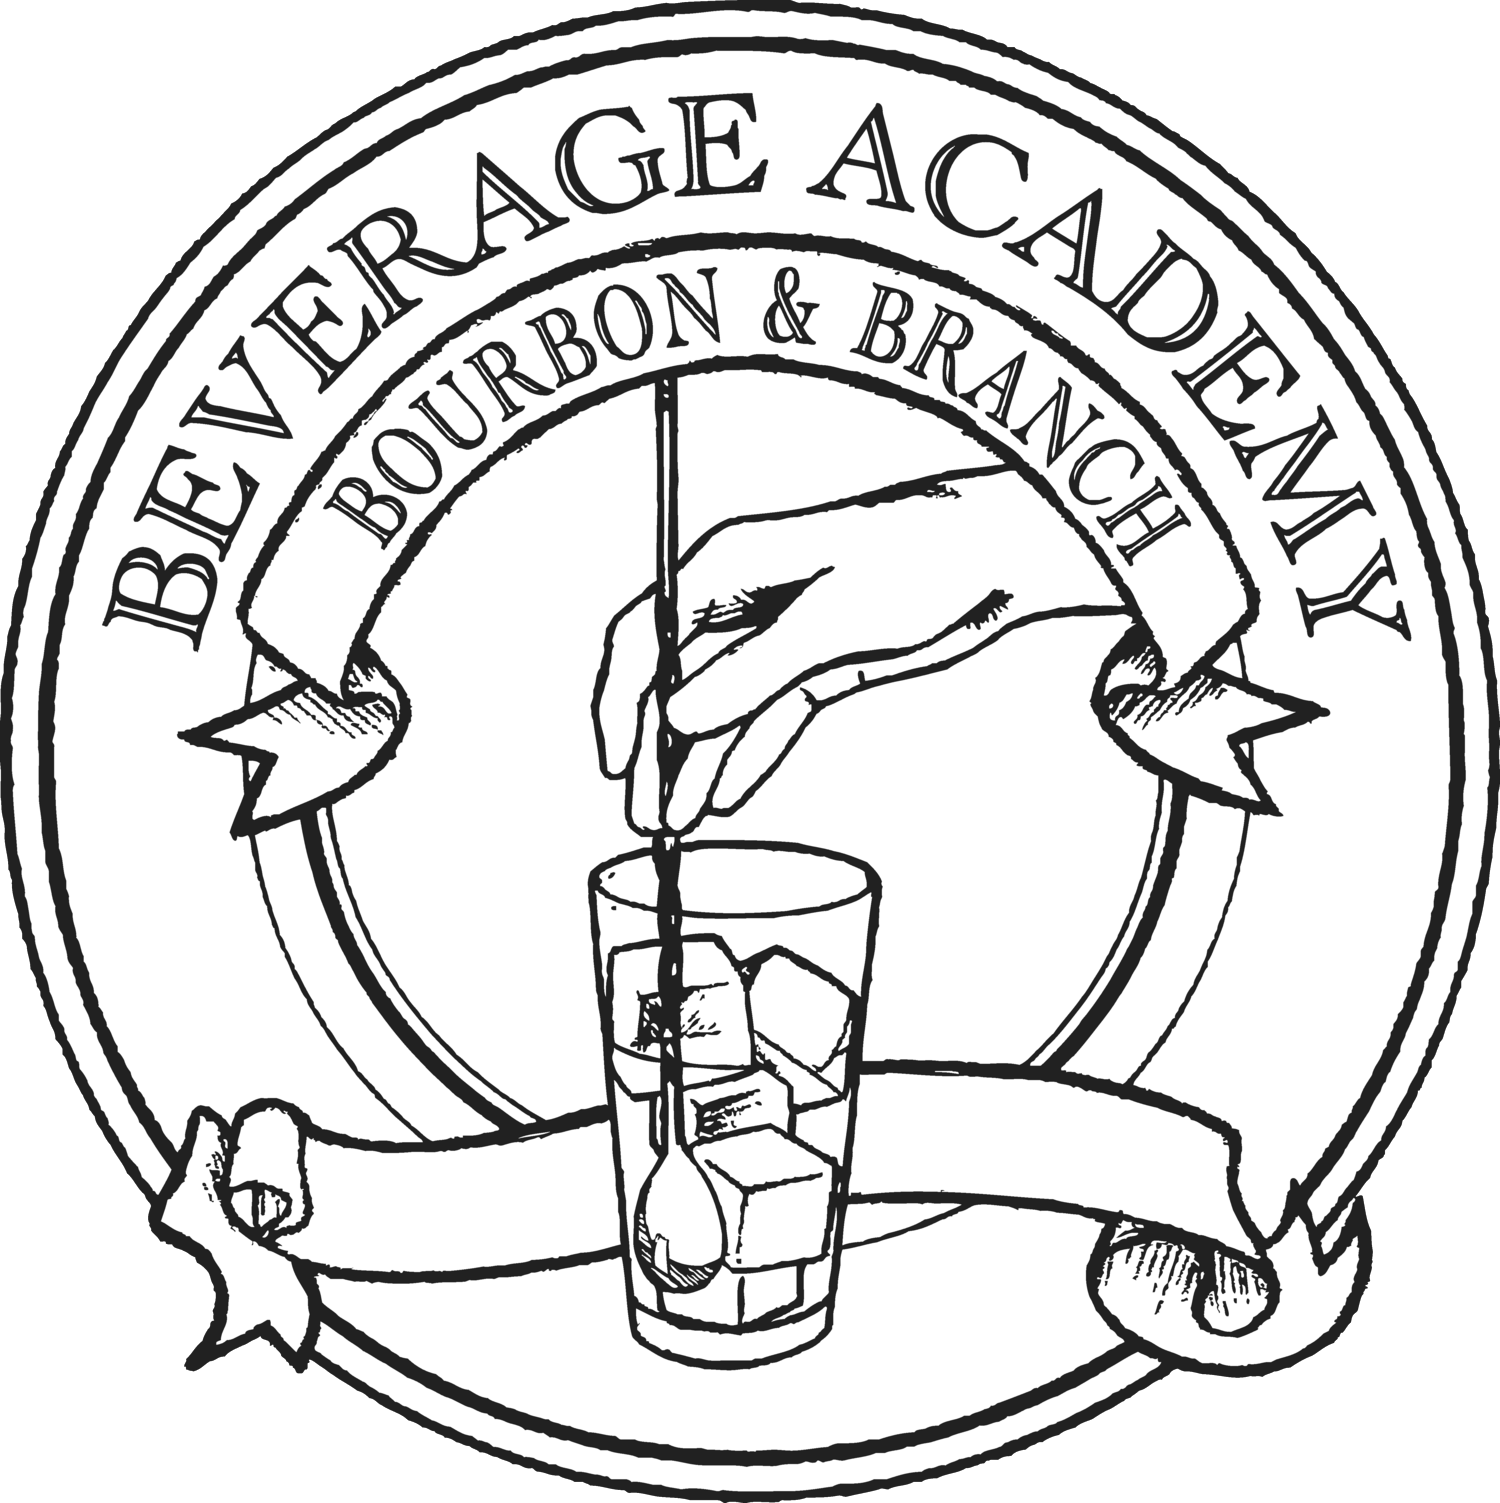 The Beverage Academy